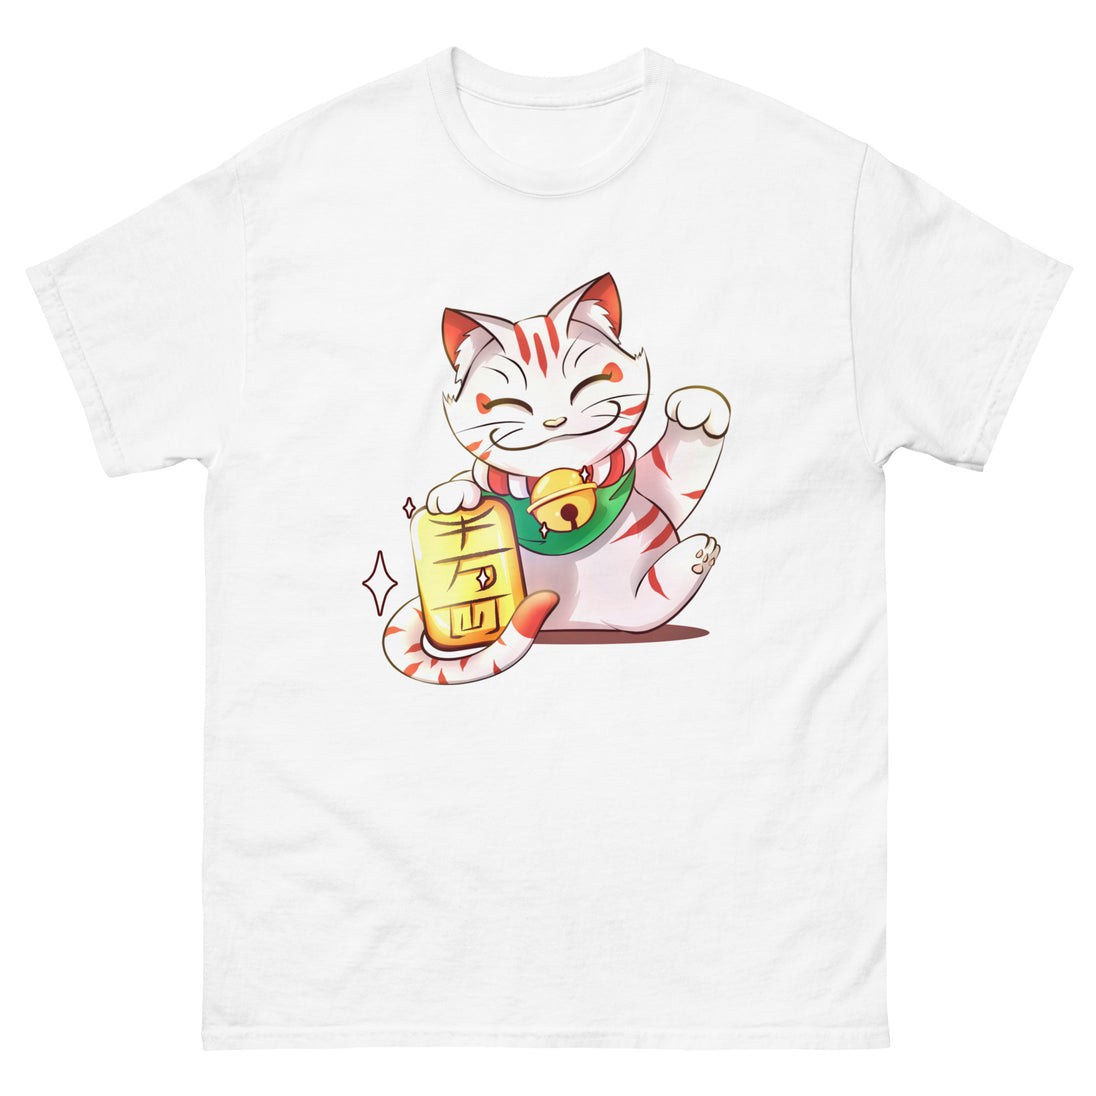 Maneki Neko T-Shirt - Soft, Comfortable, and Stylish for Gamers and Streamers